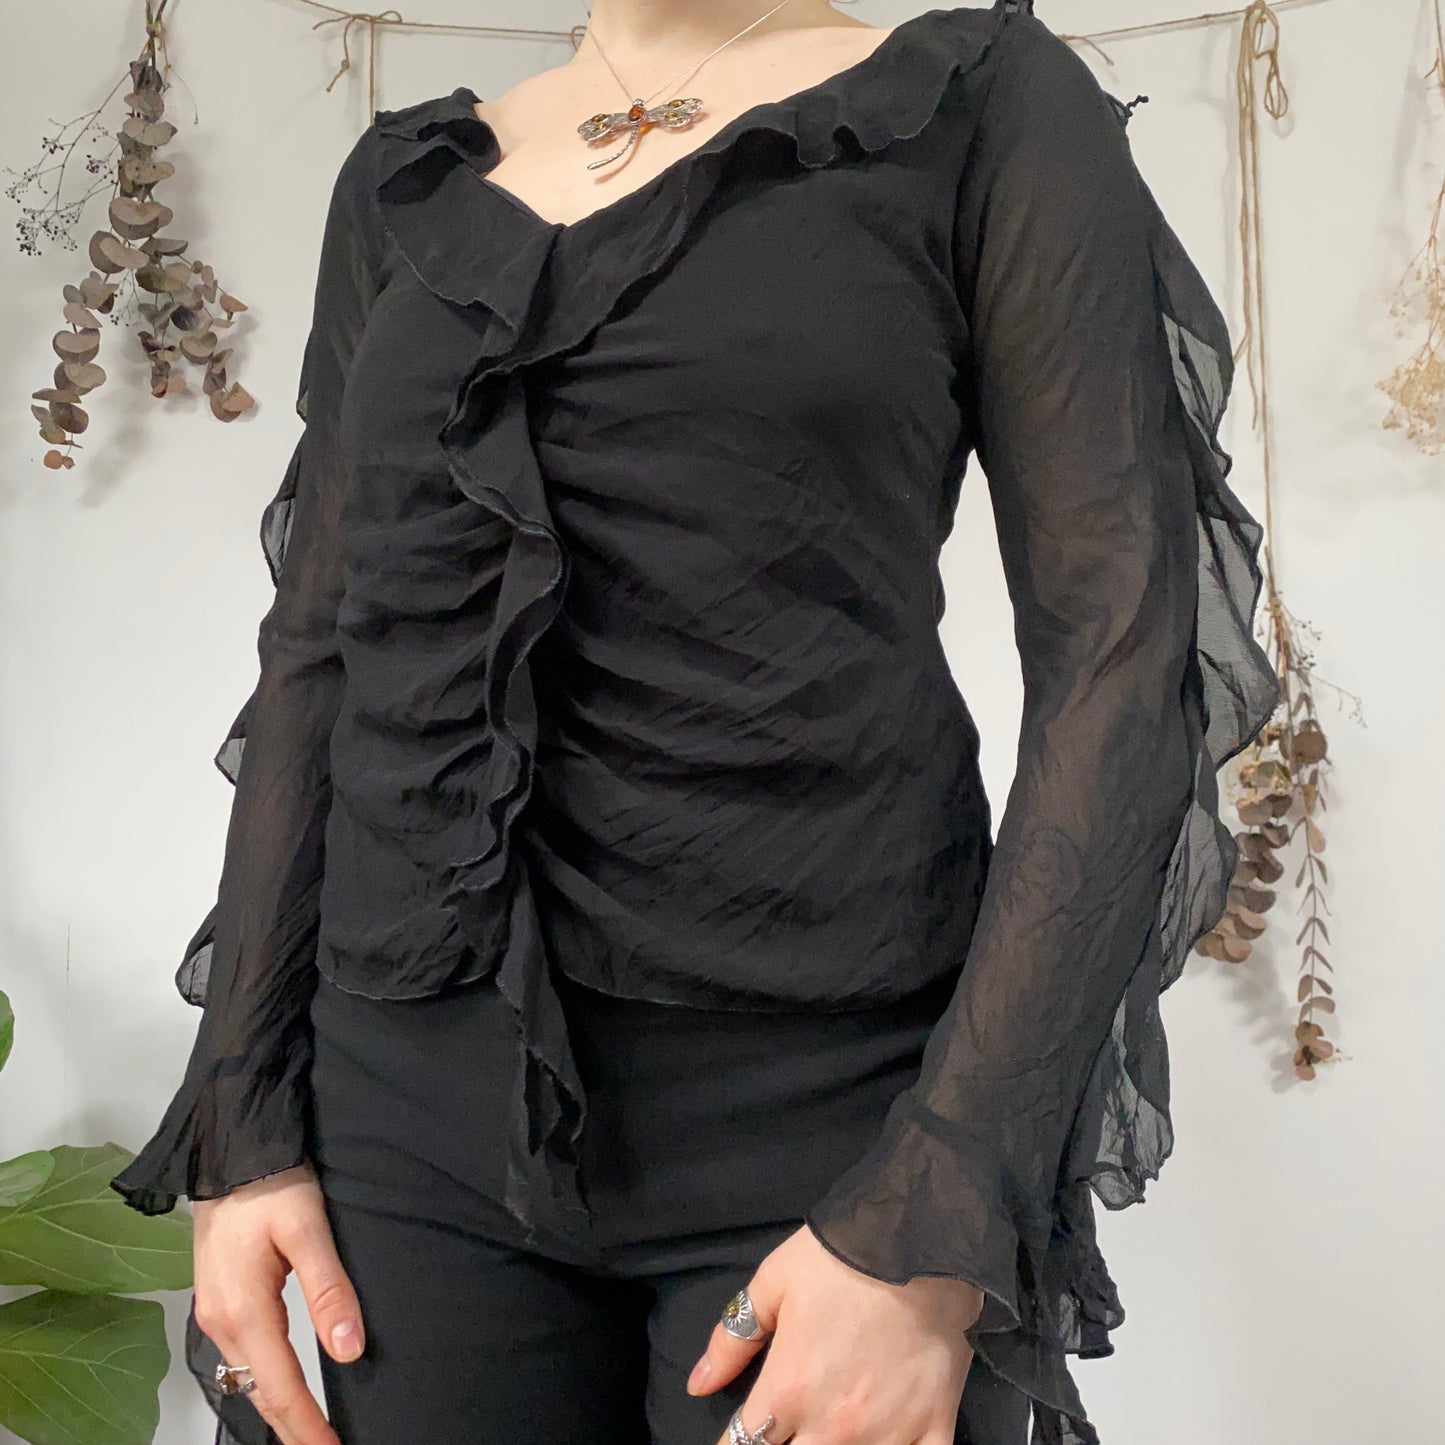 Black ruffle blouse - size M